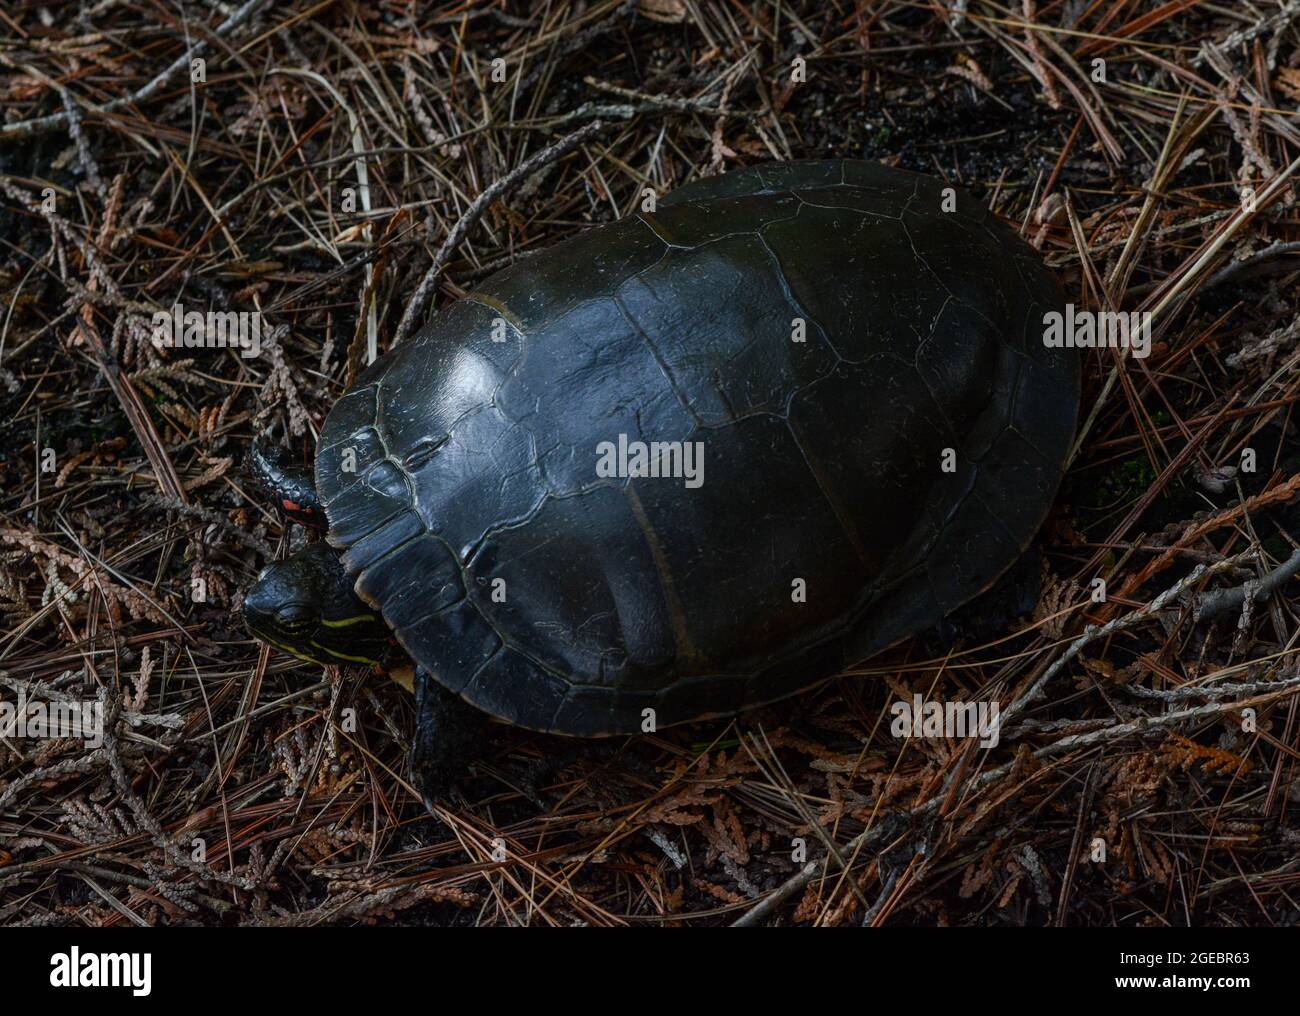 Midland Painted Turtle (Chrysemys picta marginata) dalla contea di Leelanau, Michigan, USA. Foto Stock